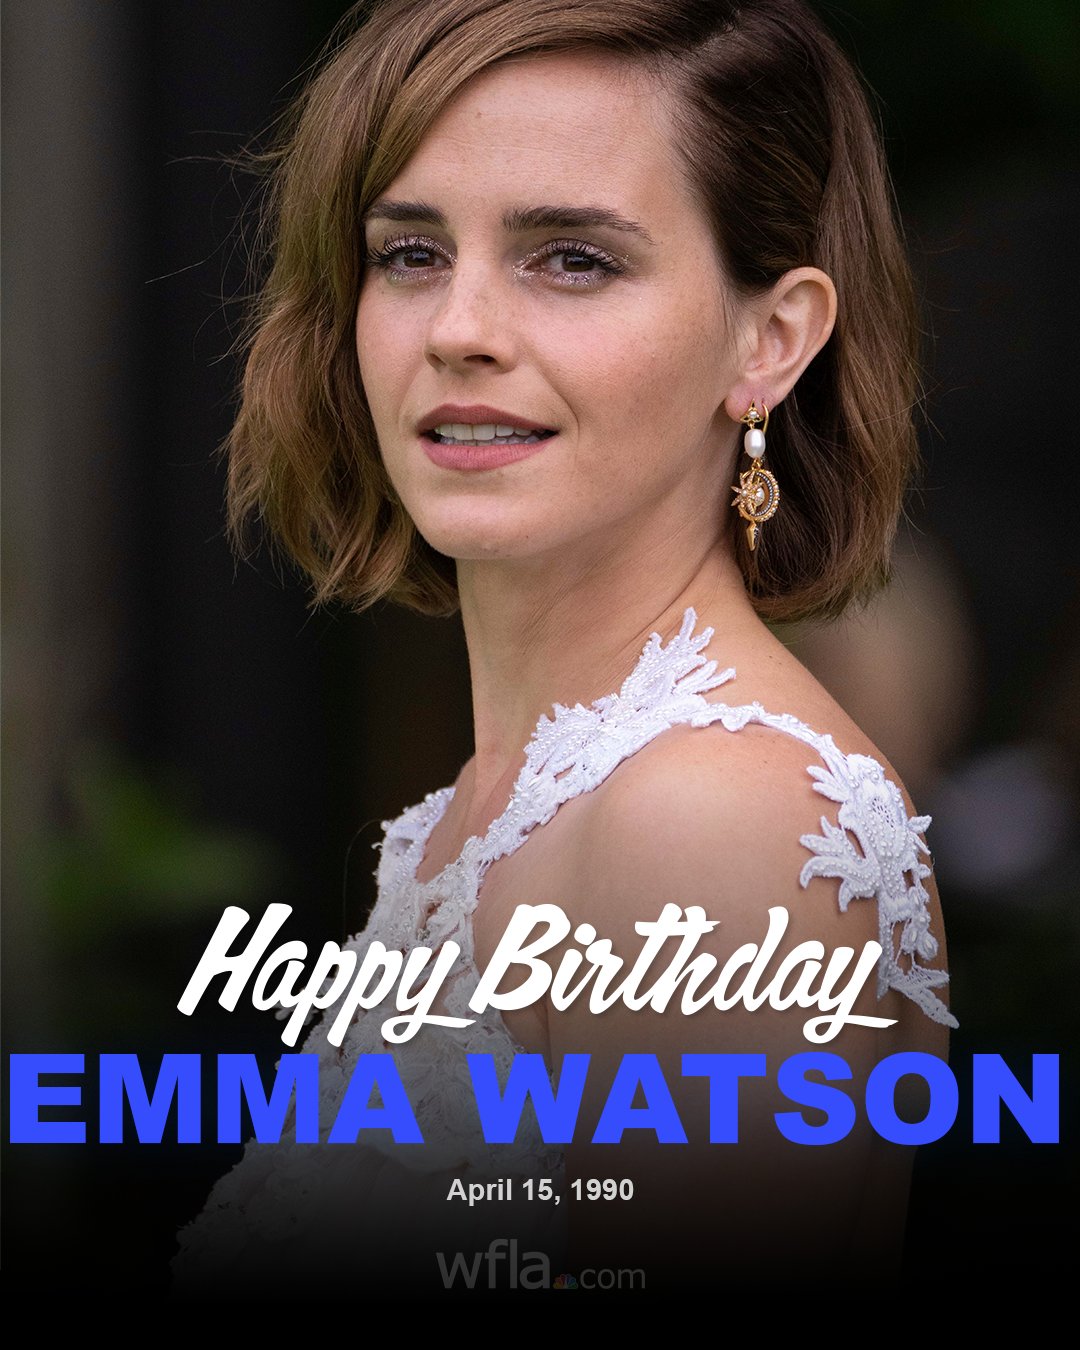 HAPPY BIRTHDAY, EMMA WATSON The Harry Potter star turns 33 today!  